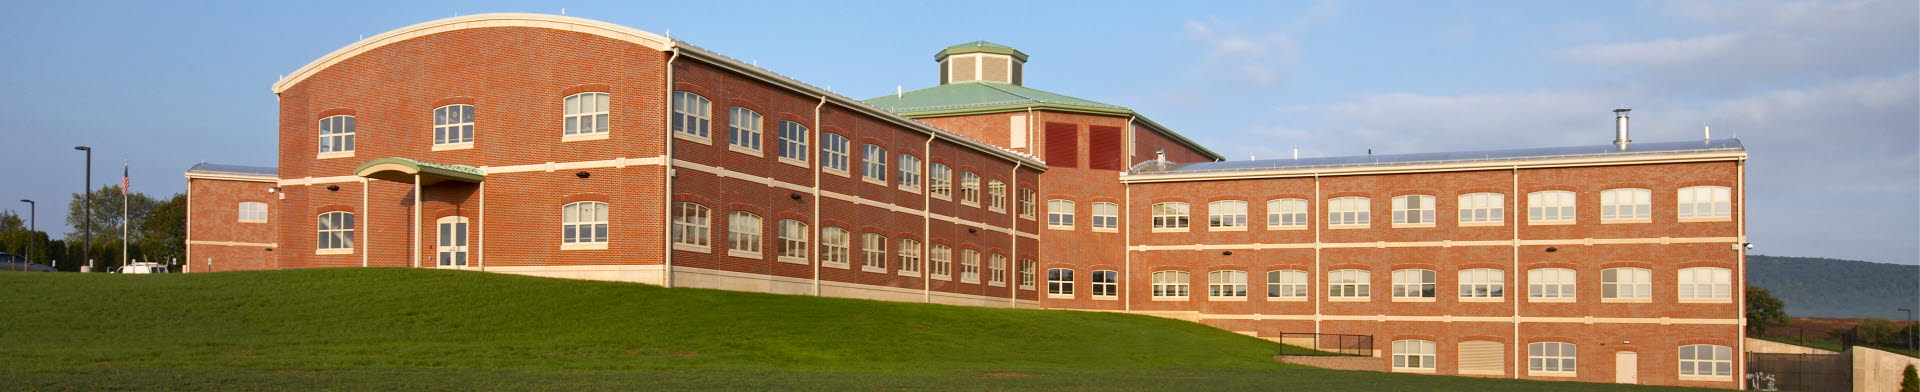 Rear View Tilden Elementary Center